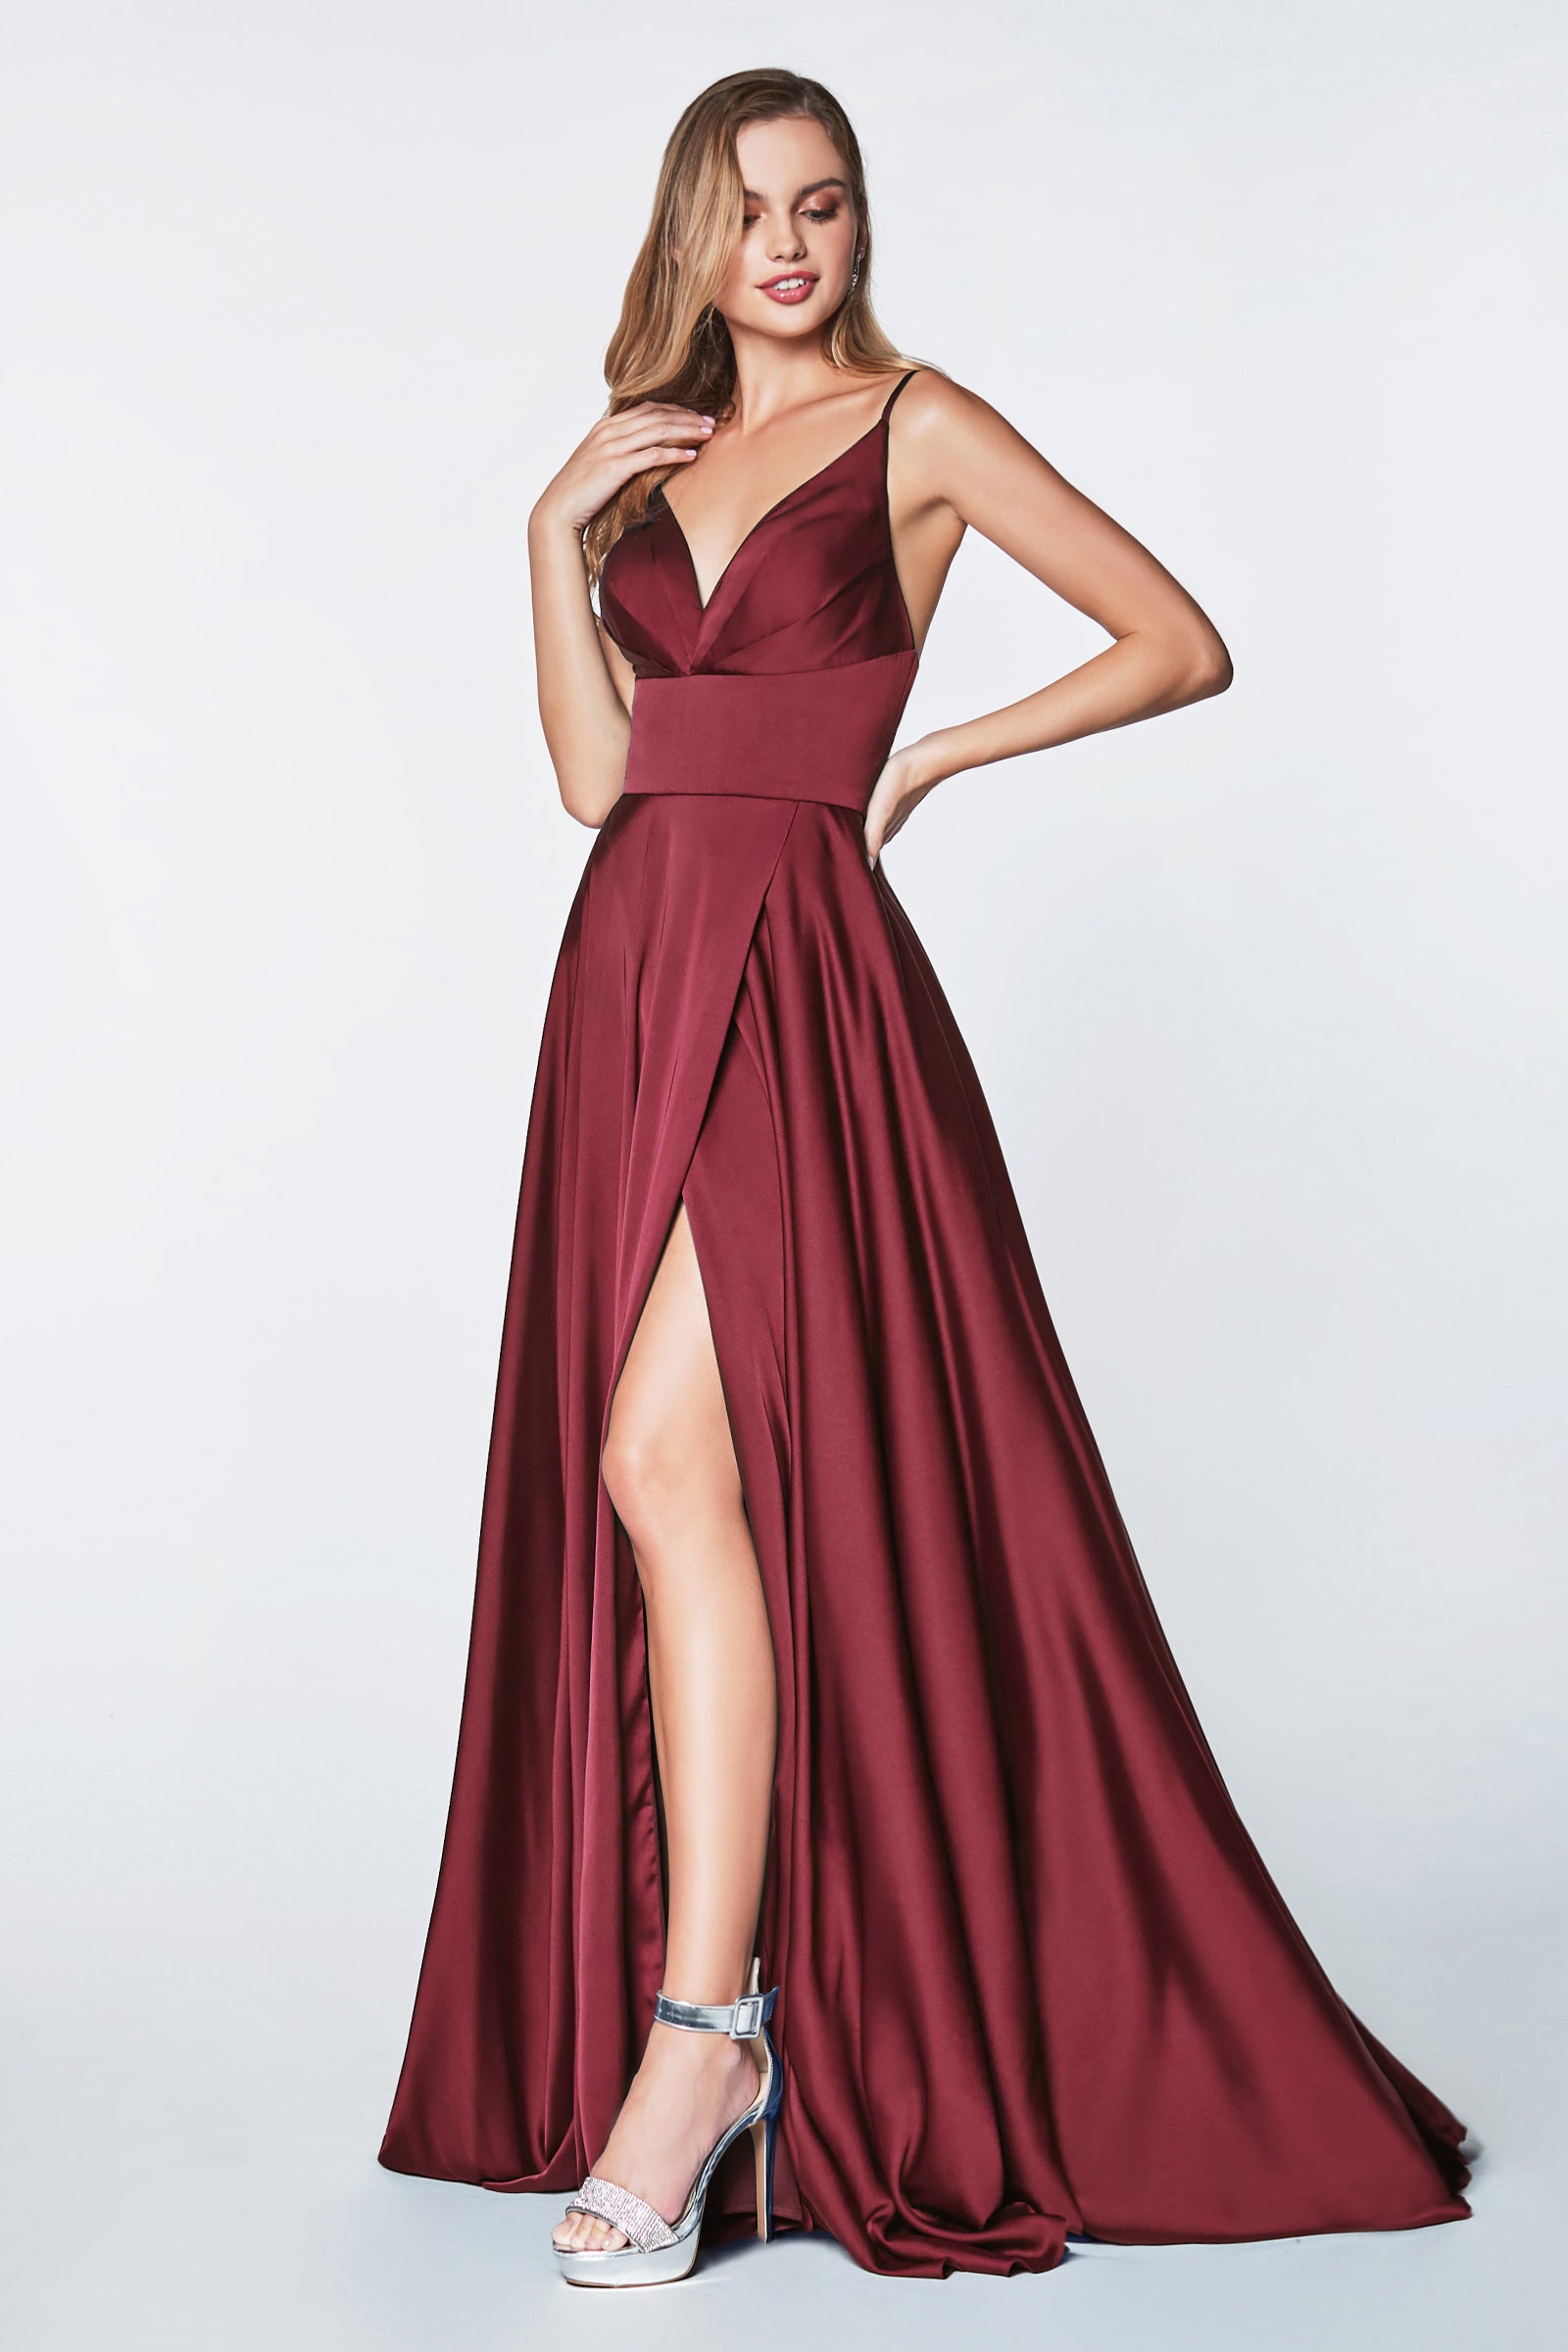 long satin wine red bridesmaid dress